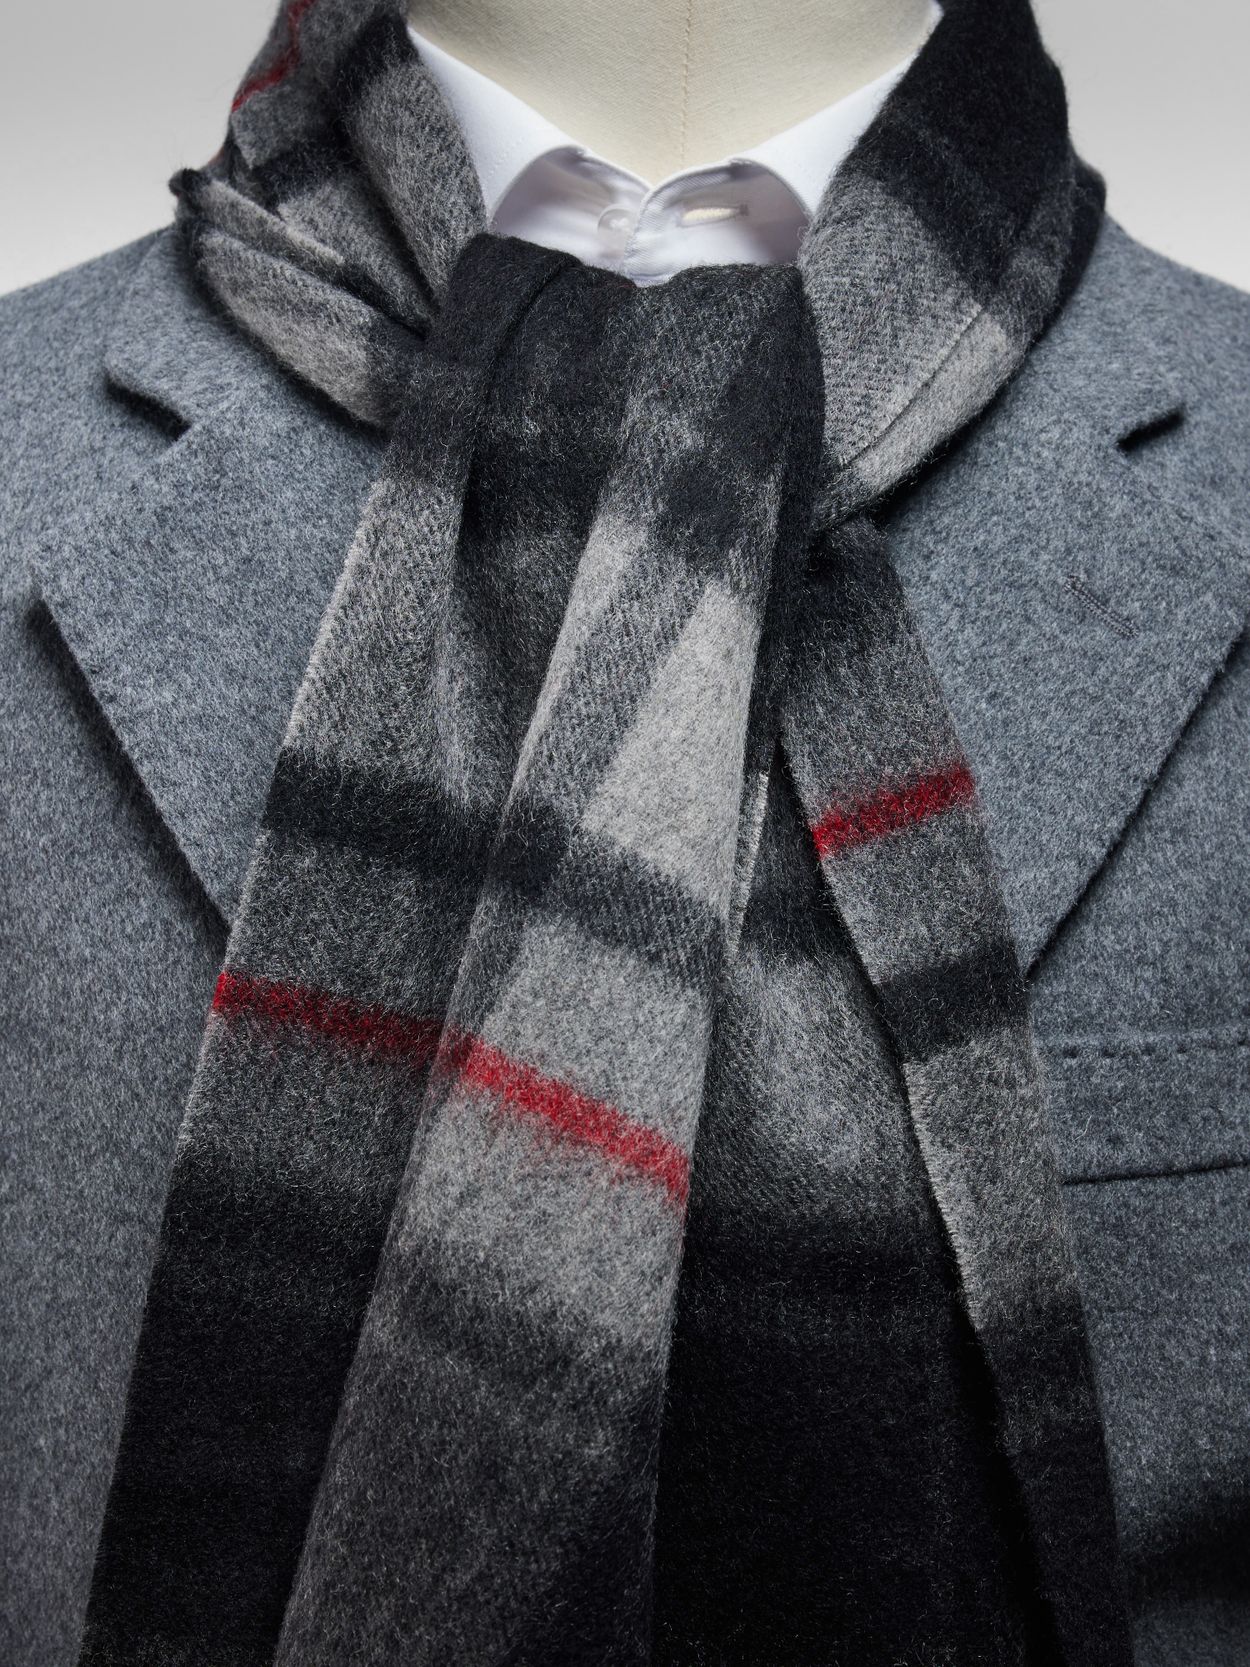 Black & Grey Winter Scarf Wool